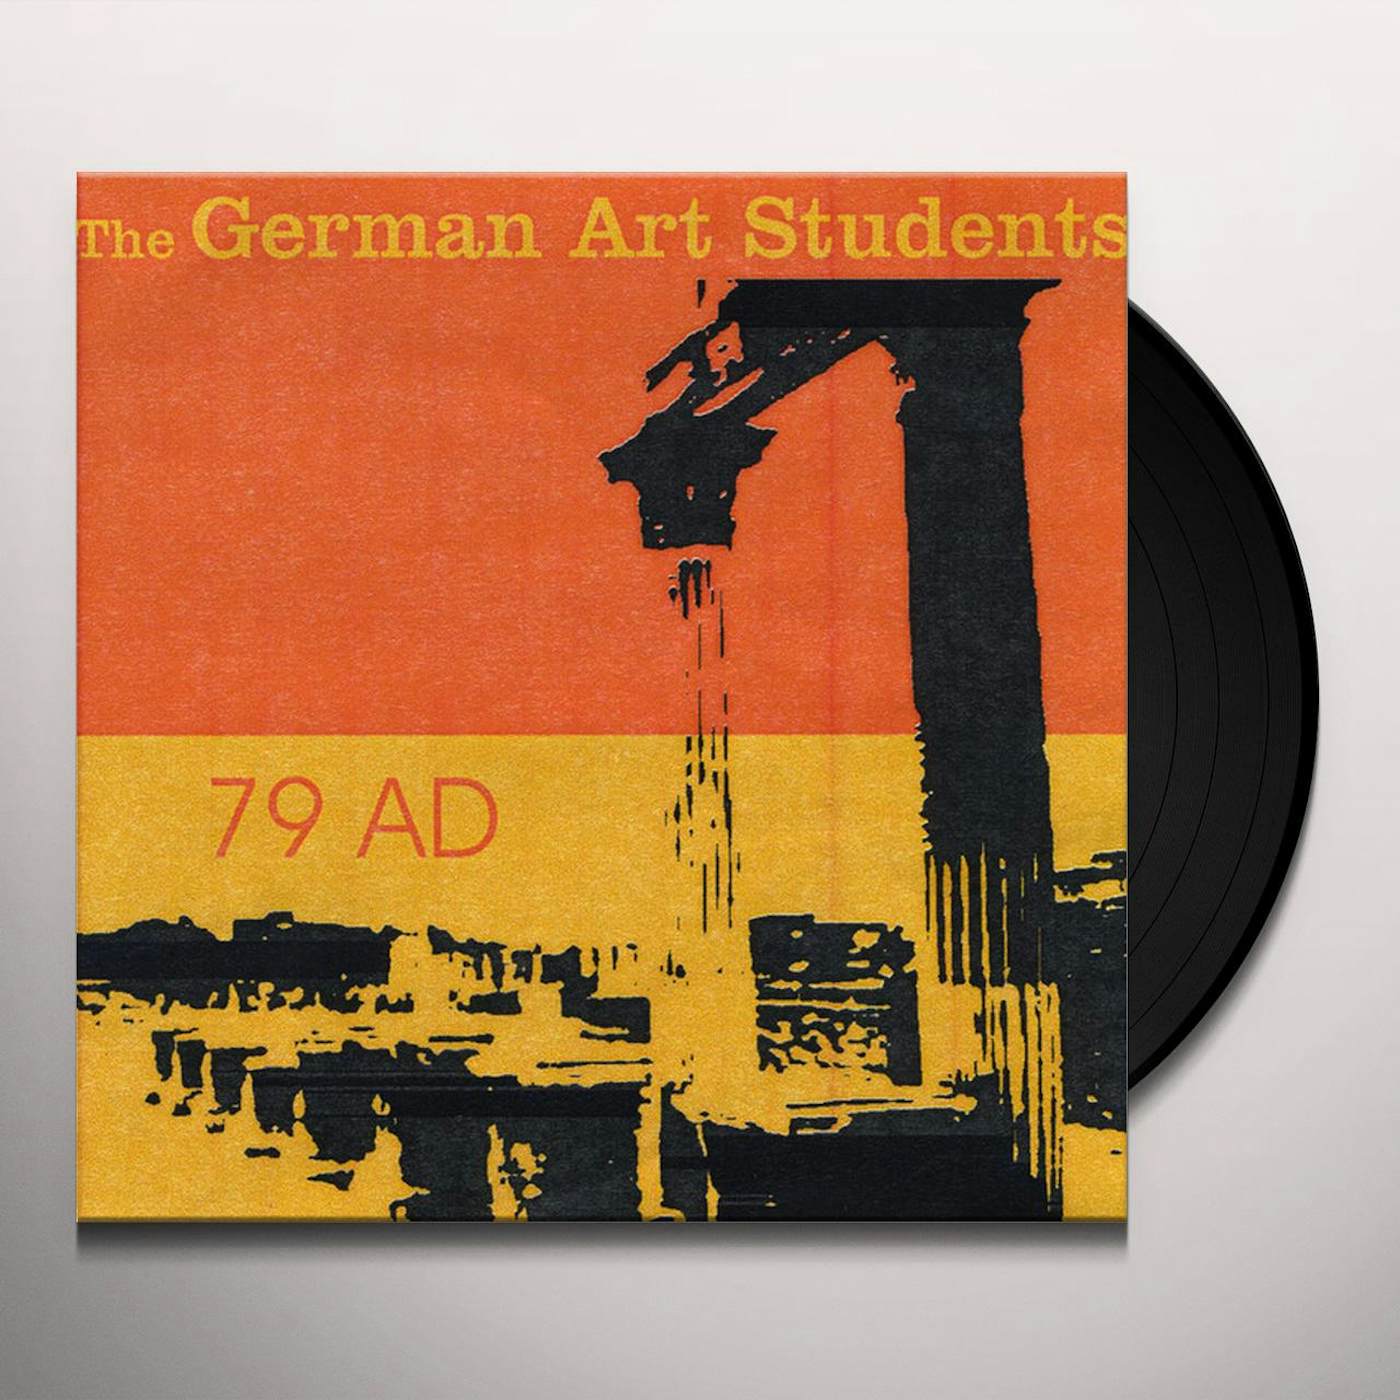 The German Art Students 79 AD Vinyl Record